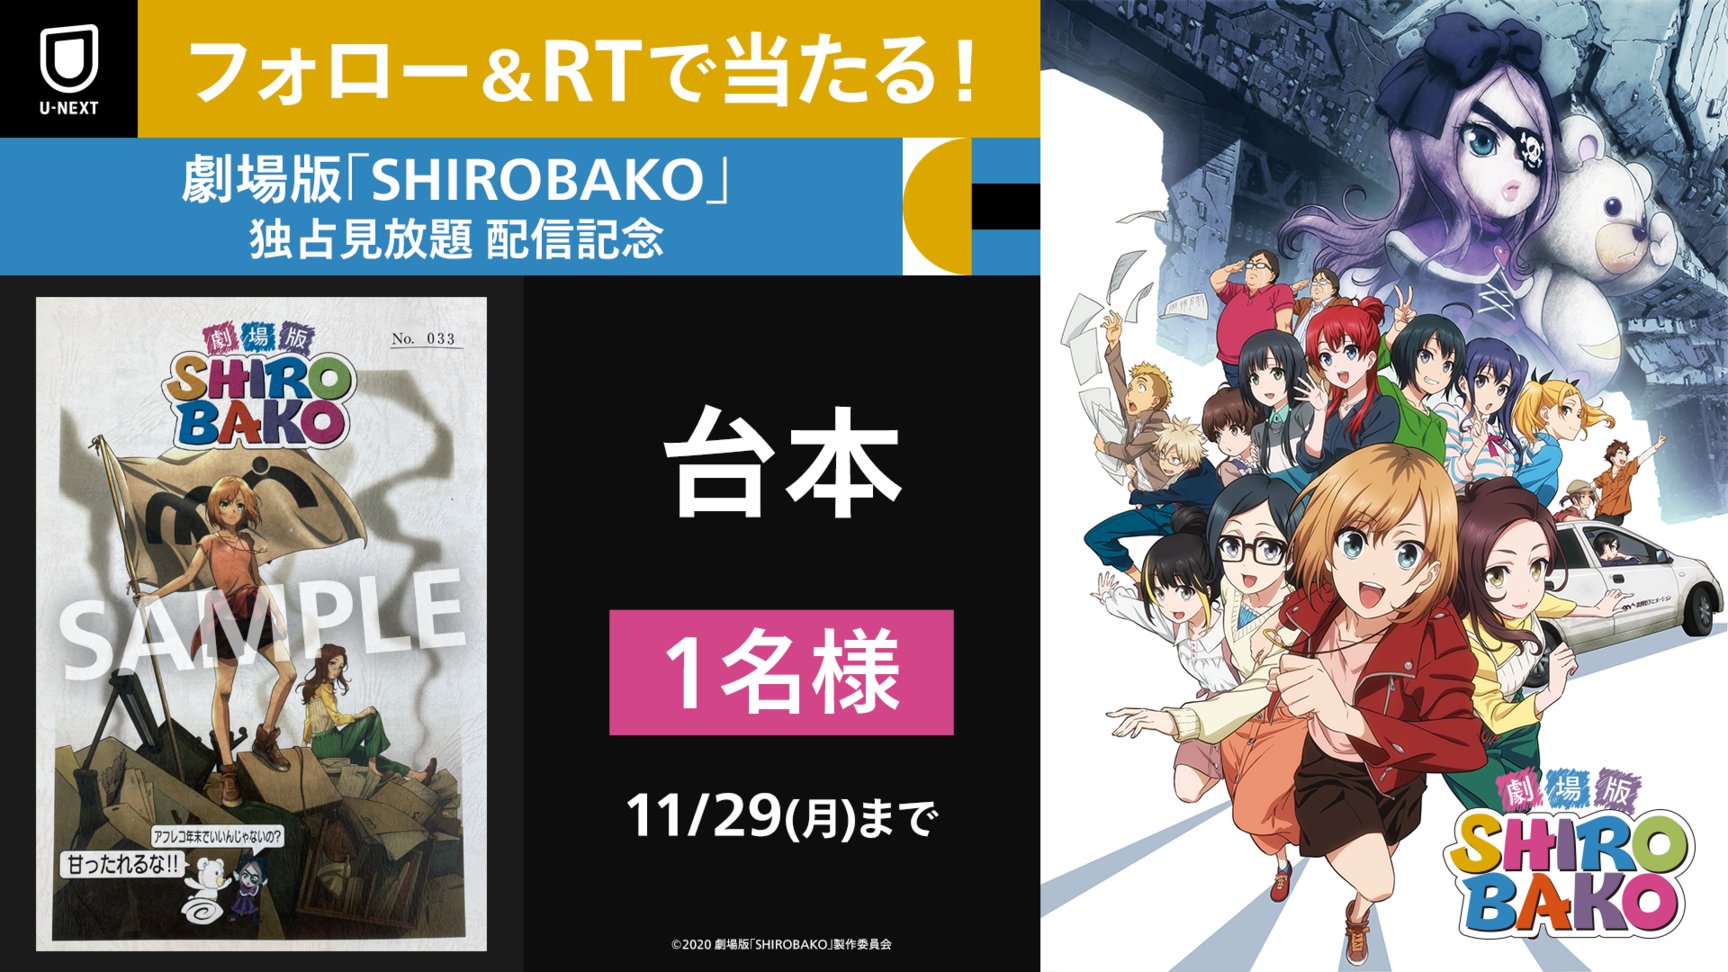 SHIROBAKO 公式🎥1/8劇場版BDDVD発売🍩 (@shirobako_anime) / Twitter